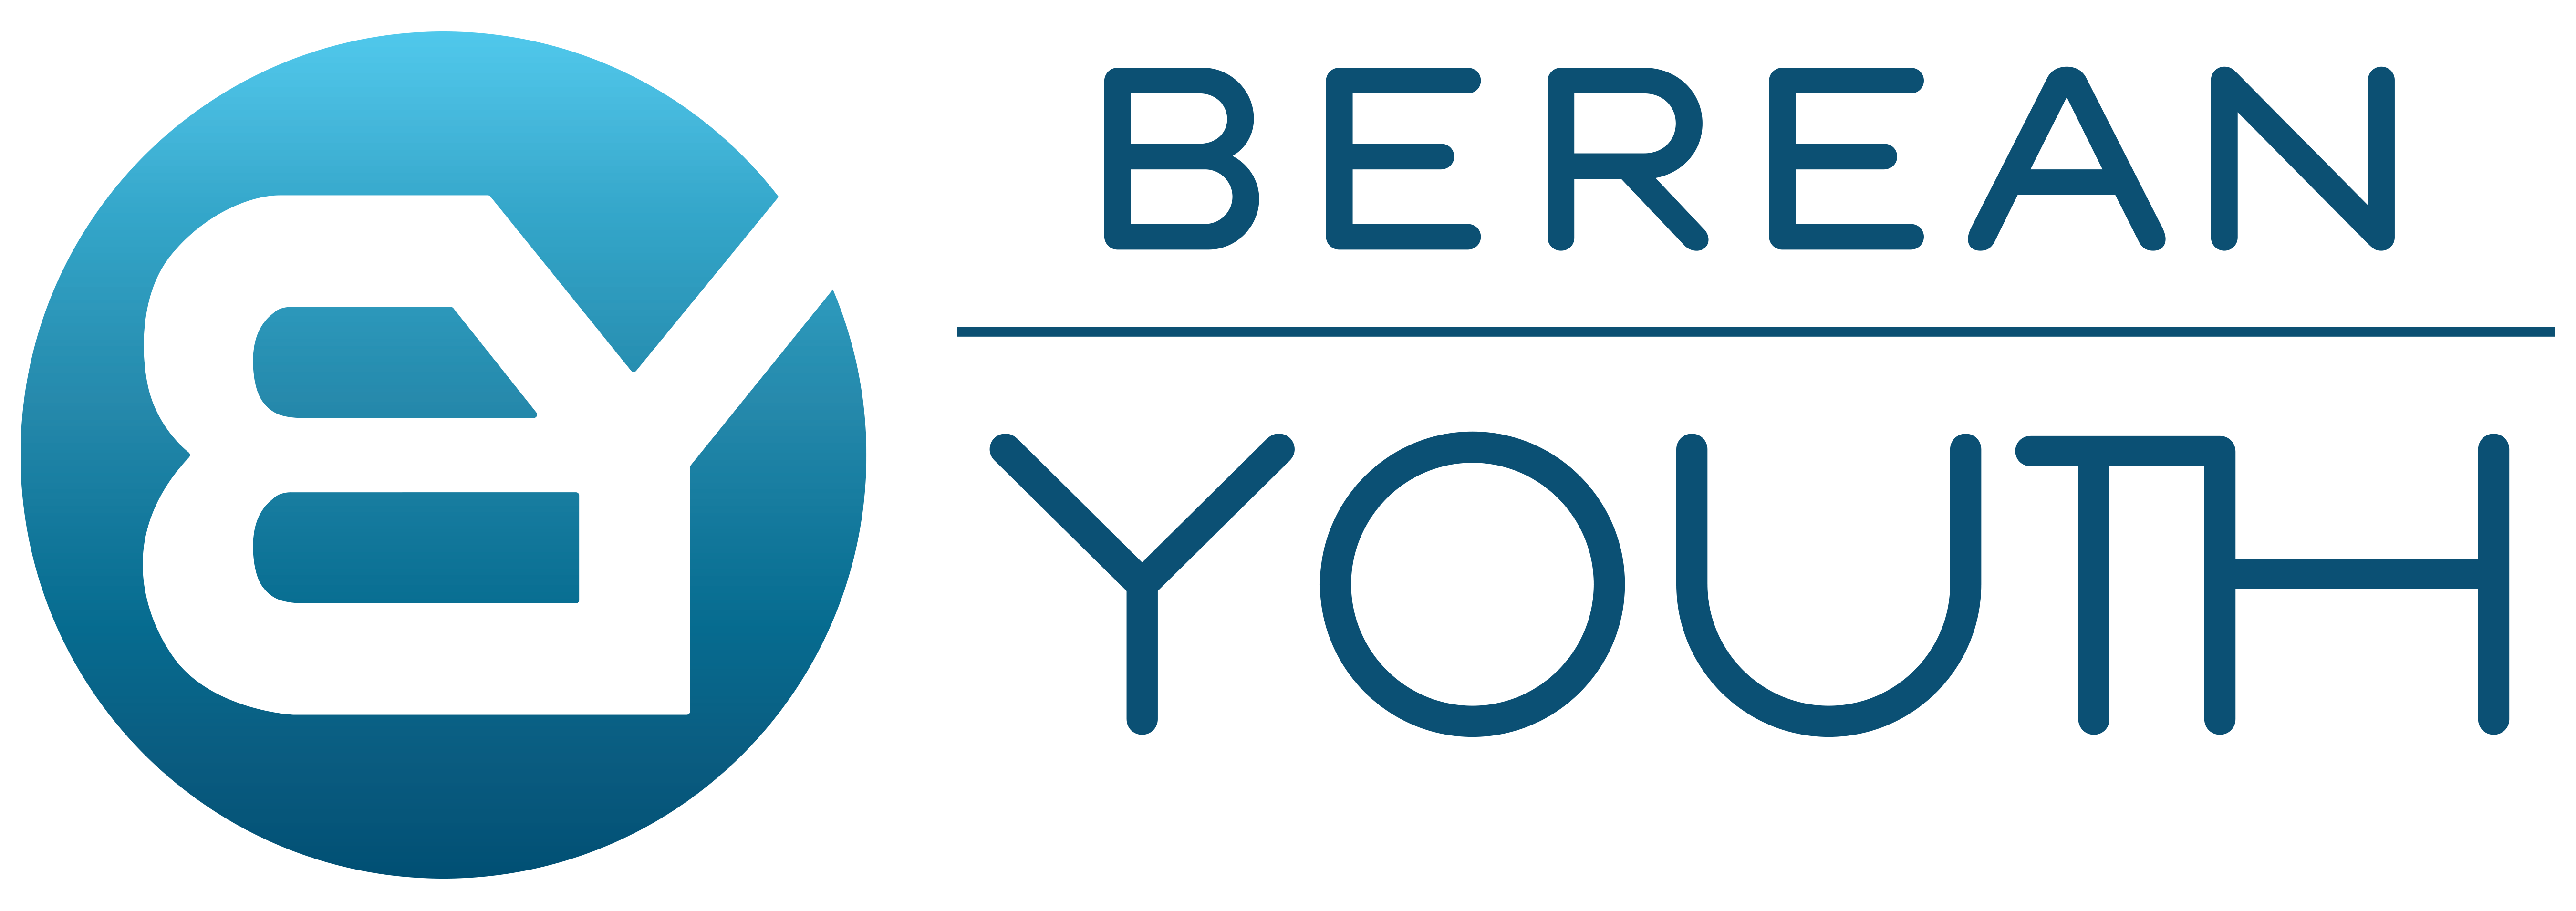 Berean Youth Webpage